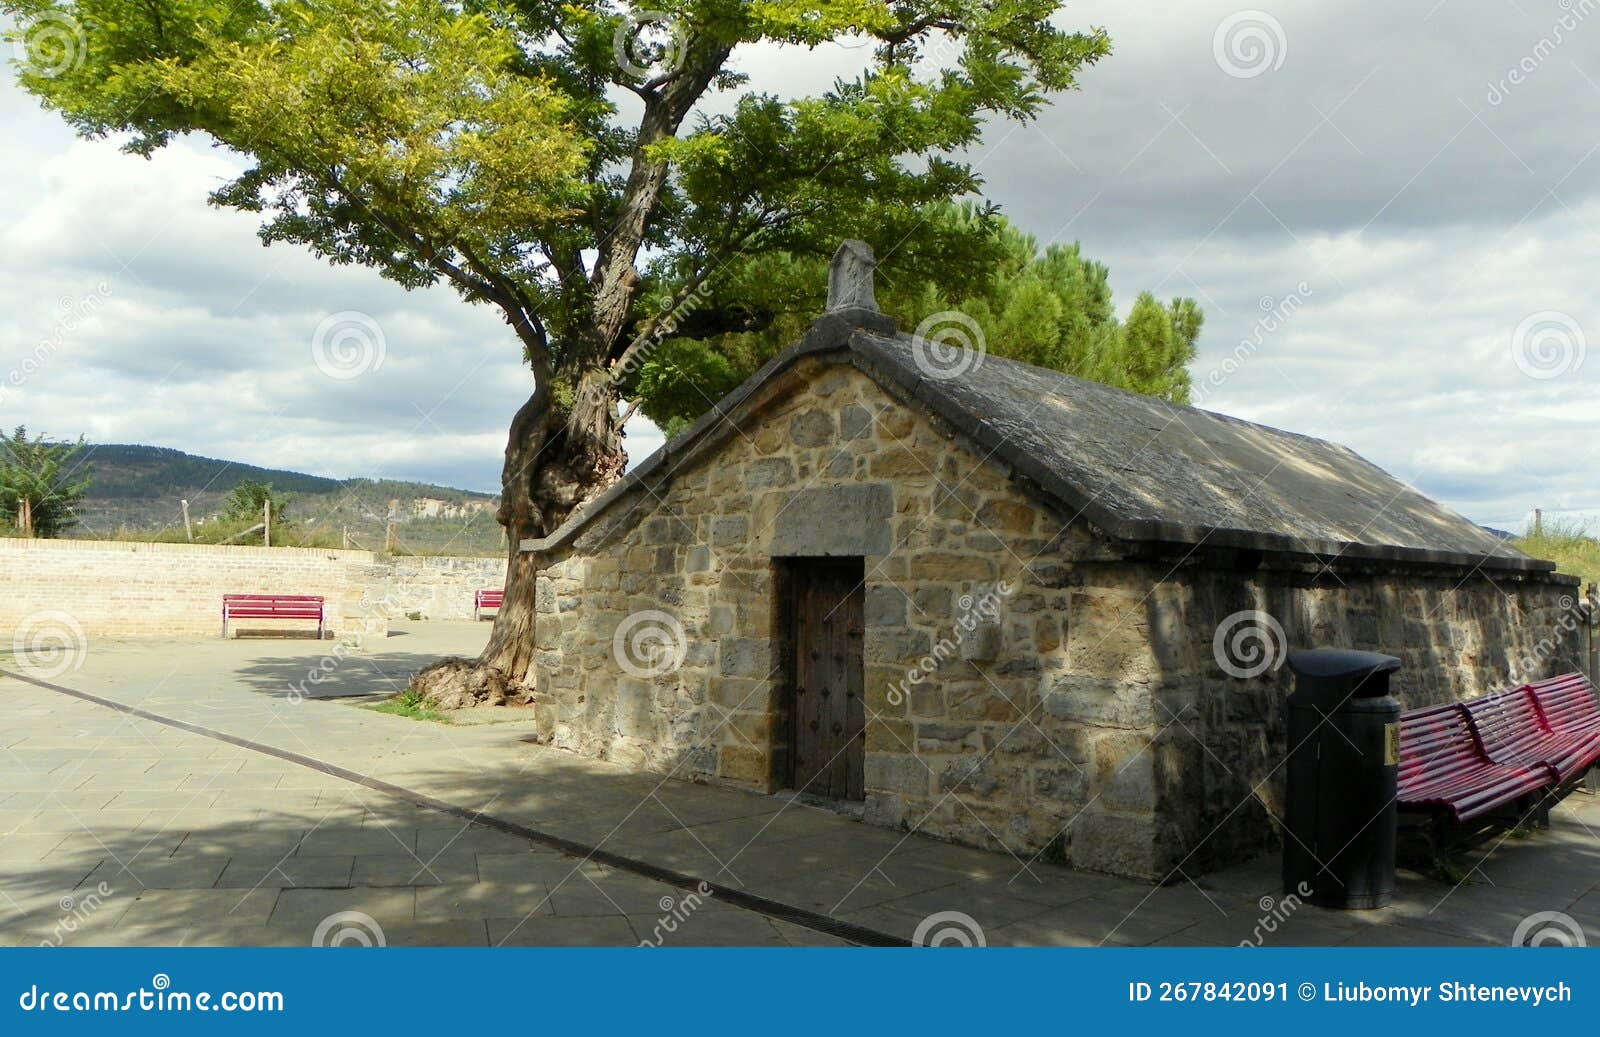 spain, pamplona, ronda obispo barbazan, mirador del caballo blanco, tree and stone building